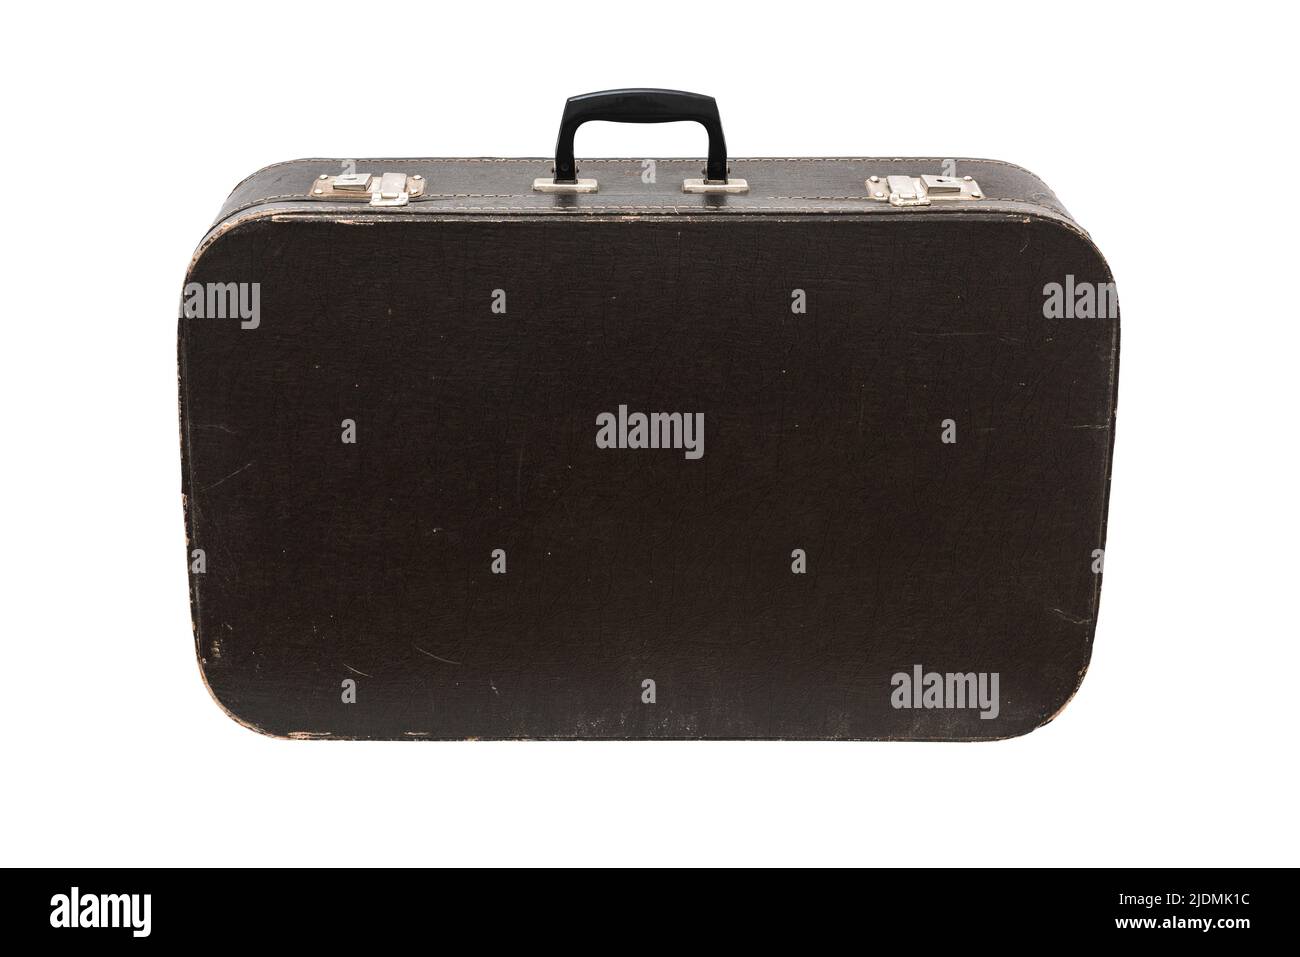 Old leather vintage suitcase isolated on white Stock Photo